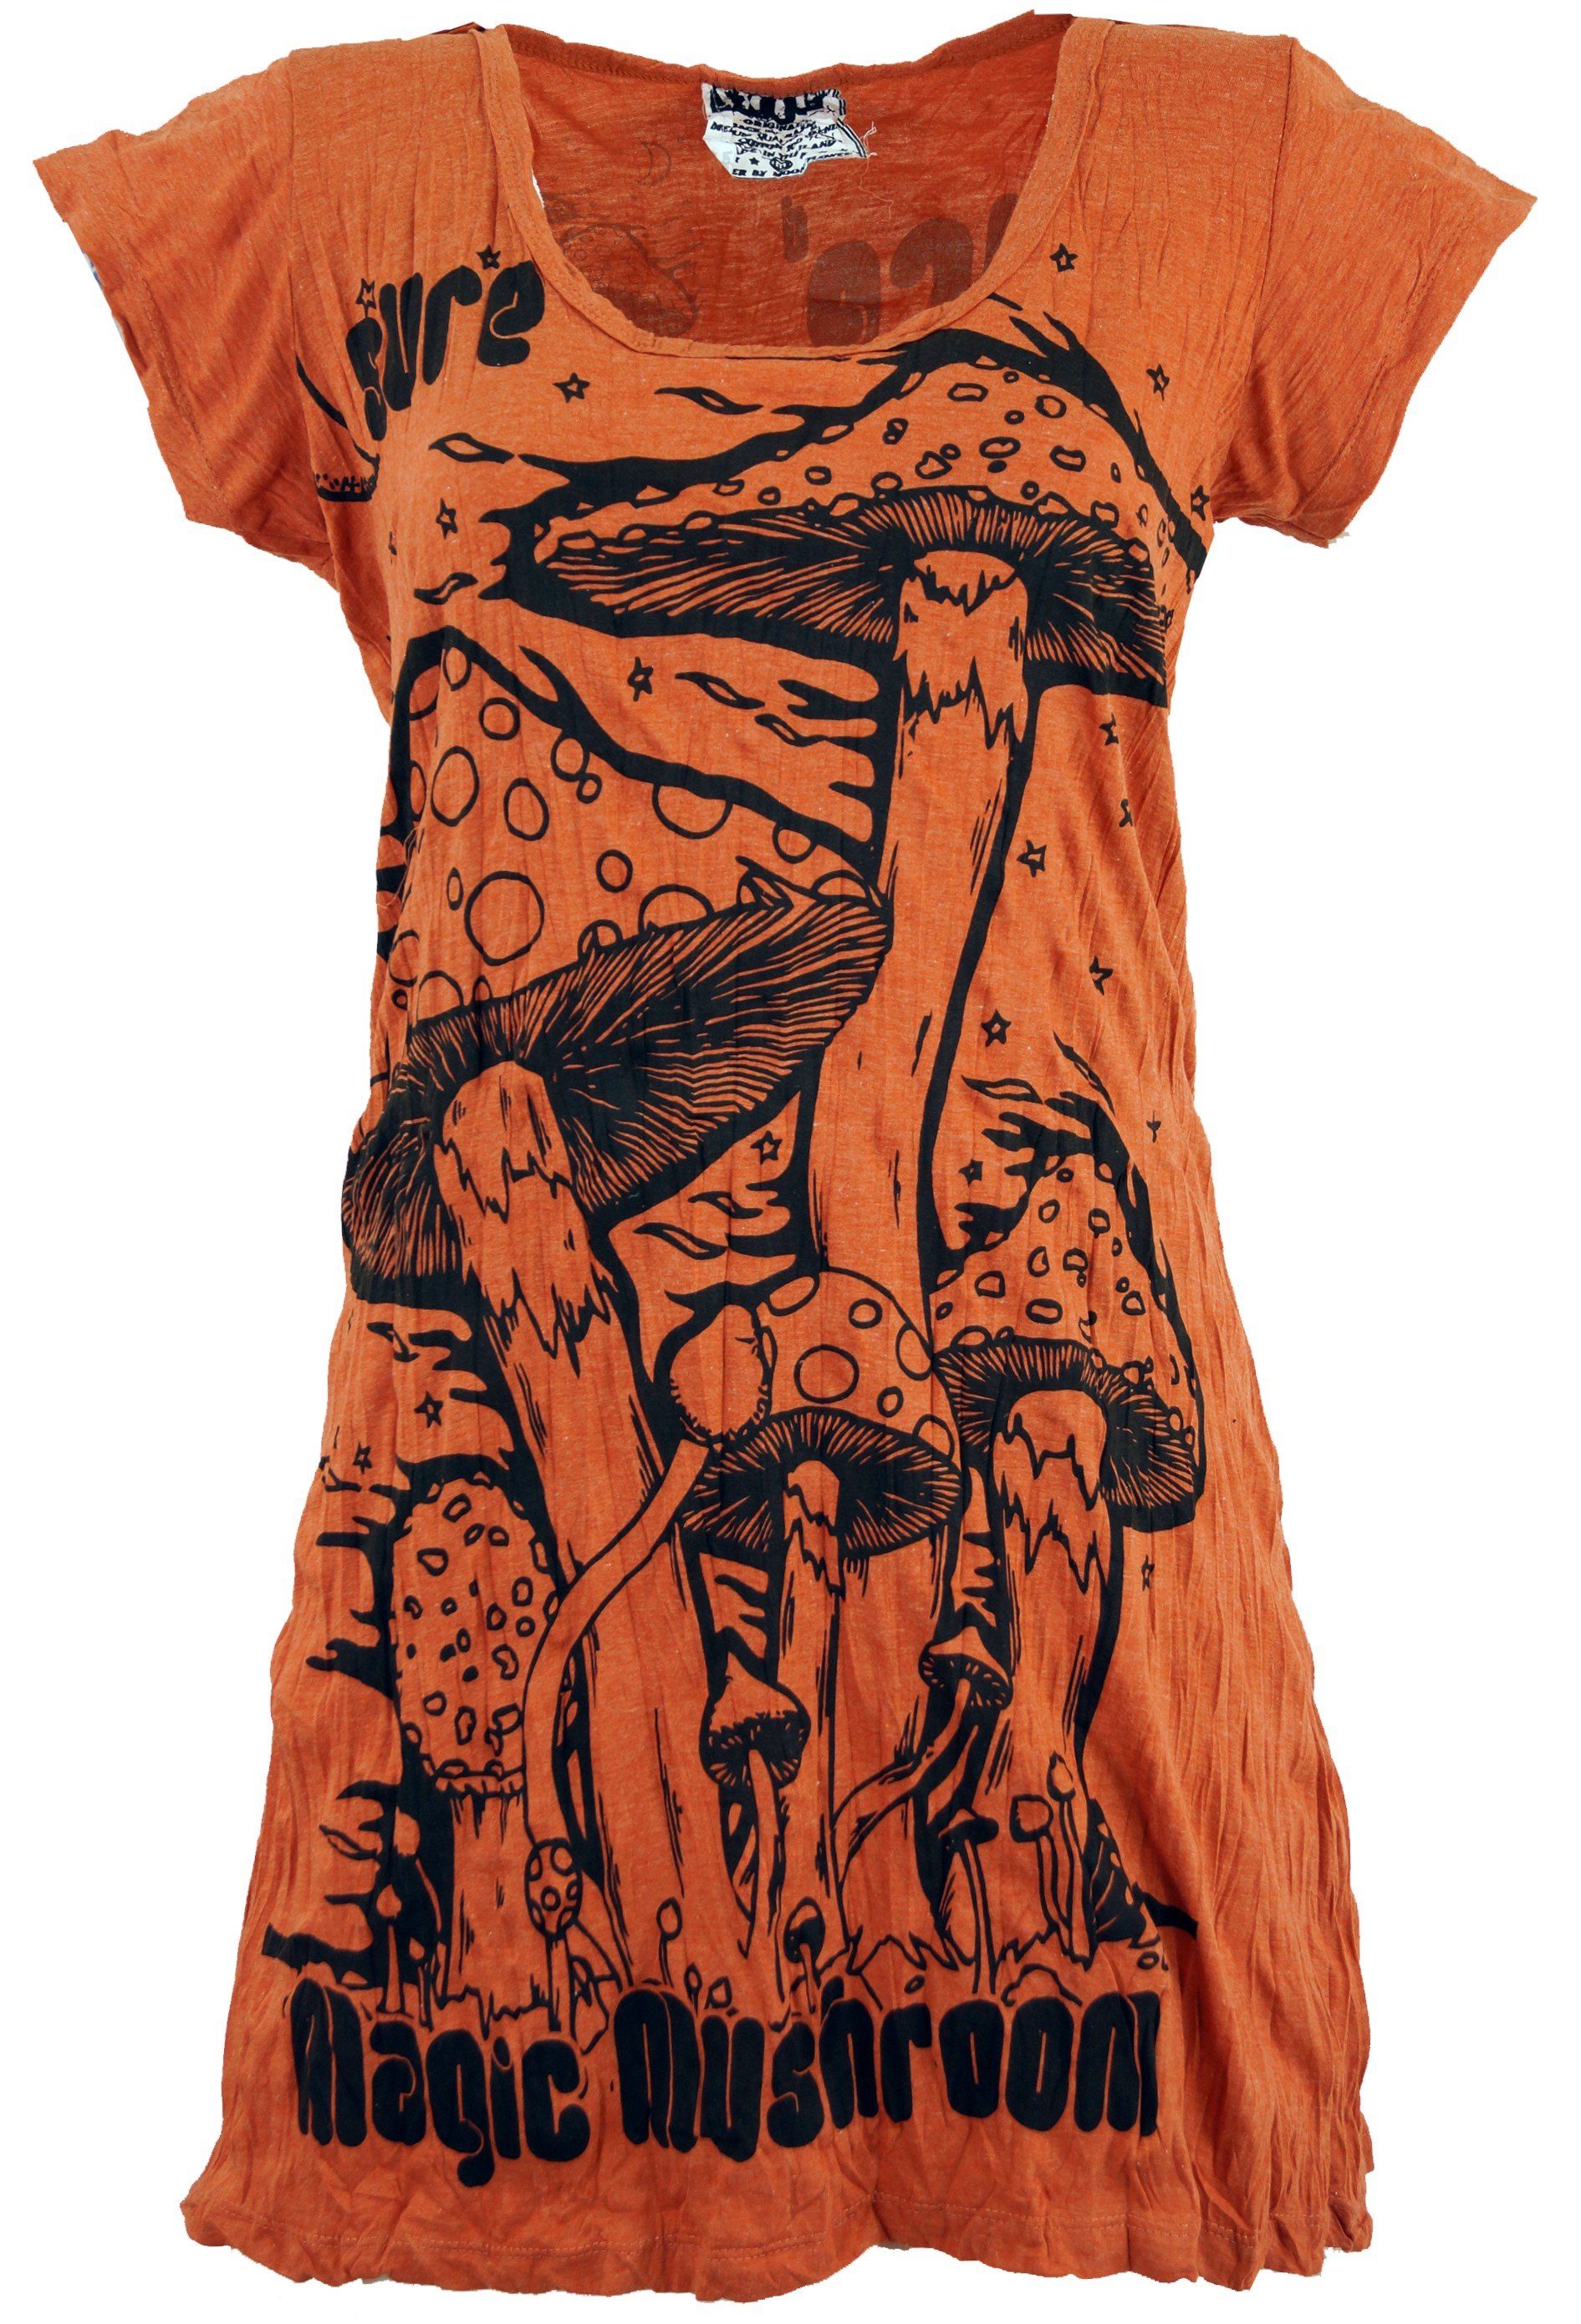 Guru-Shop T-Shirt Sure Long Shirt, Minikleid Magic Mushroom -.. Festival, Goa Style, alternative Bekleidung rostorange